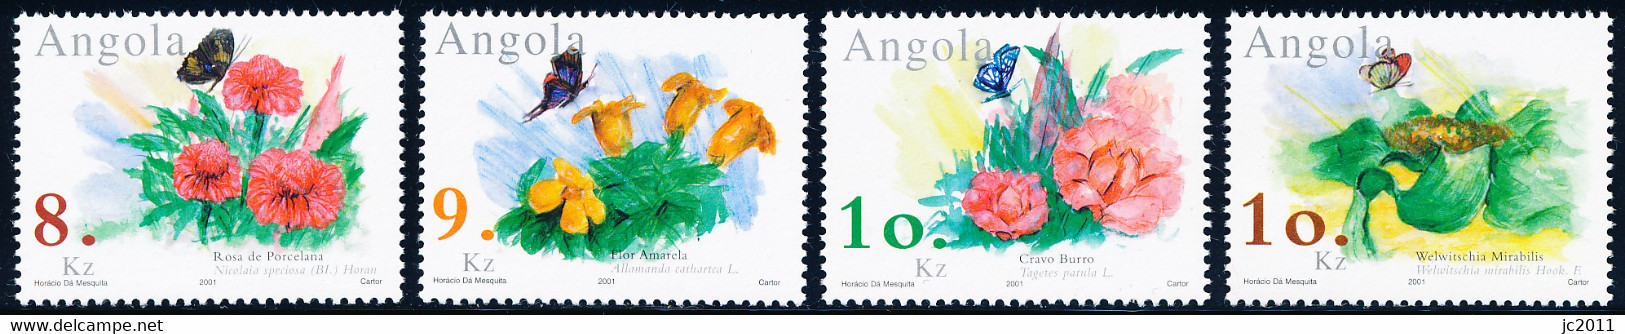 Angola - 2001 - Belgica / Angolan Flora - MNH - Angola